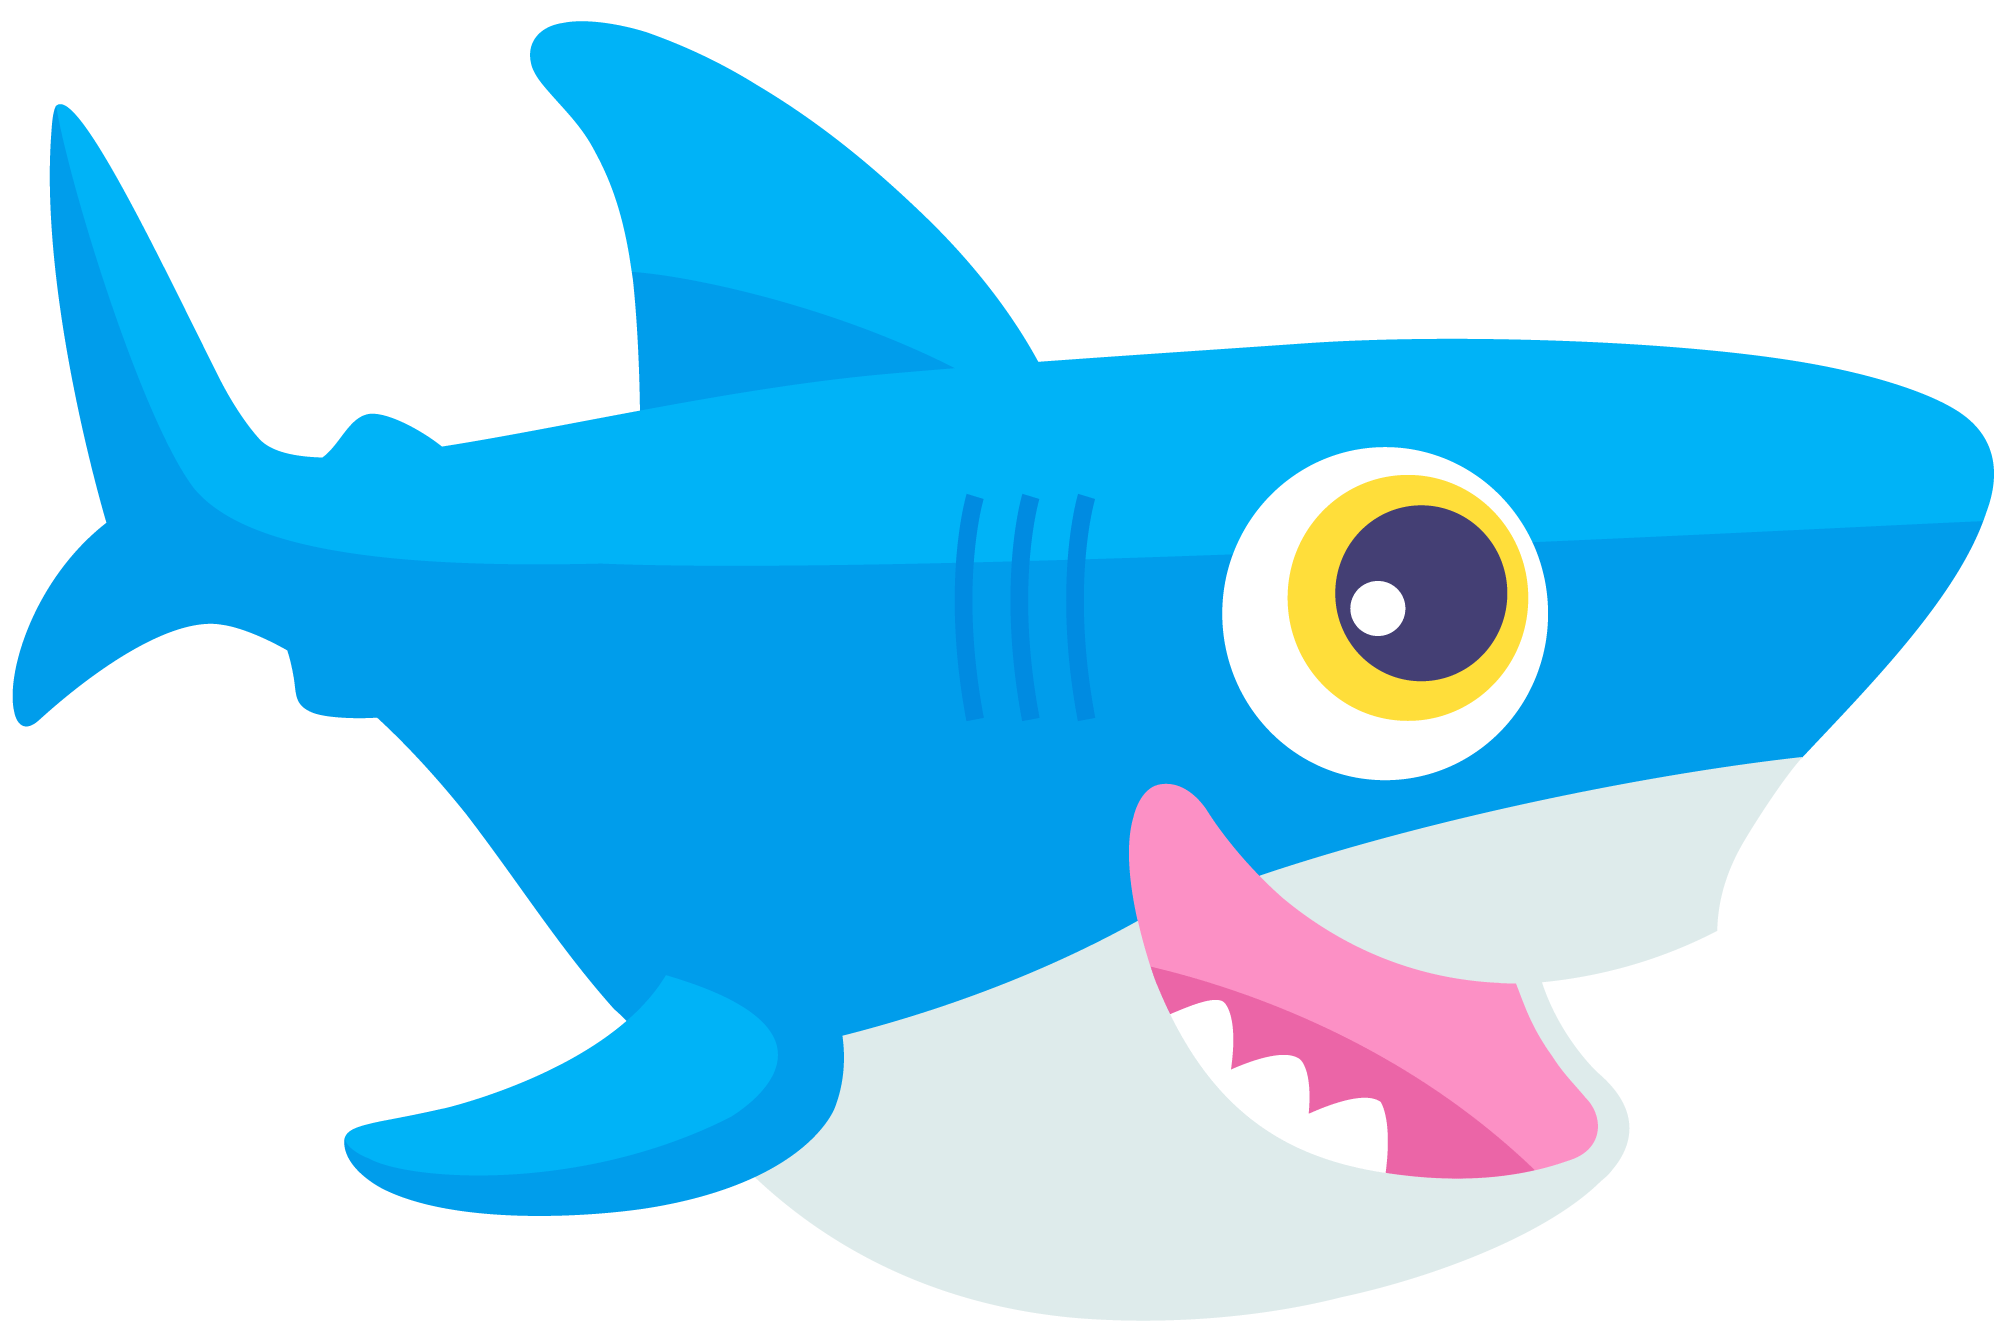 Sammy the shark, DigitalOcean mascot